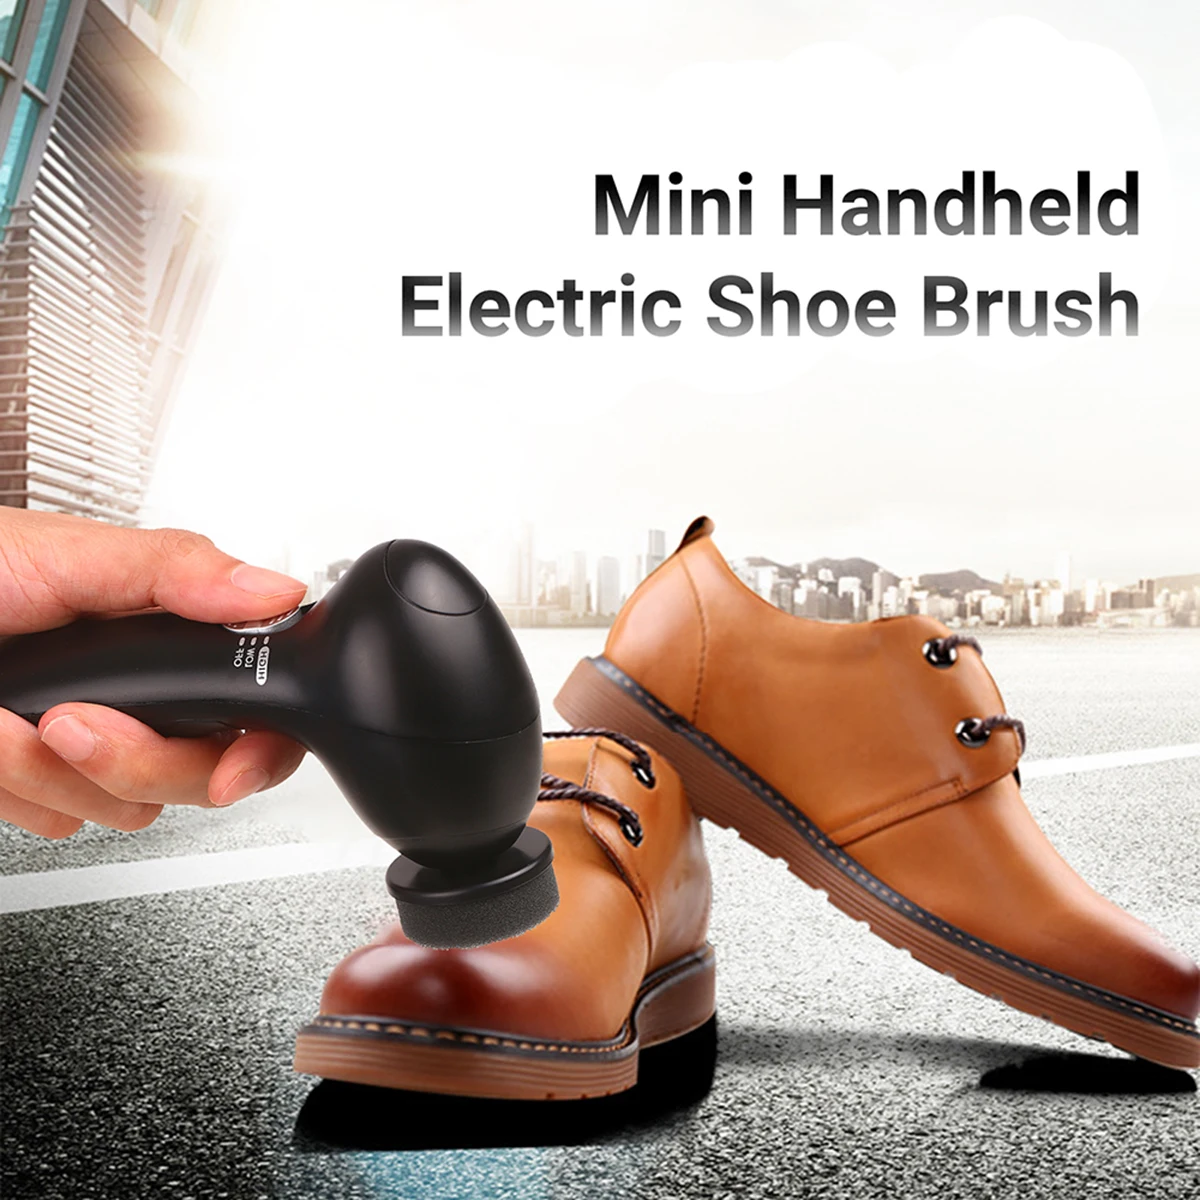 https://ae01.alicdn.com/kf/Sae2dbd178cb34593a3a8656c9cc27273a/Mini-Handheld-Electric-Shoe-Brush-Shoe-Shine-Polisher-Kit-Shoe-Polisher-Dust-Cleaner-with-4-Brush.jpg